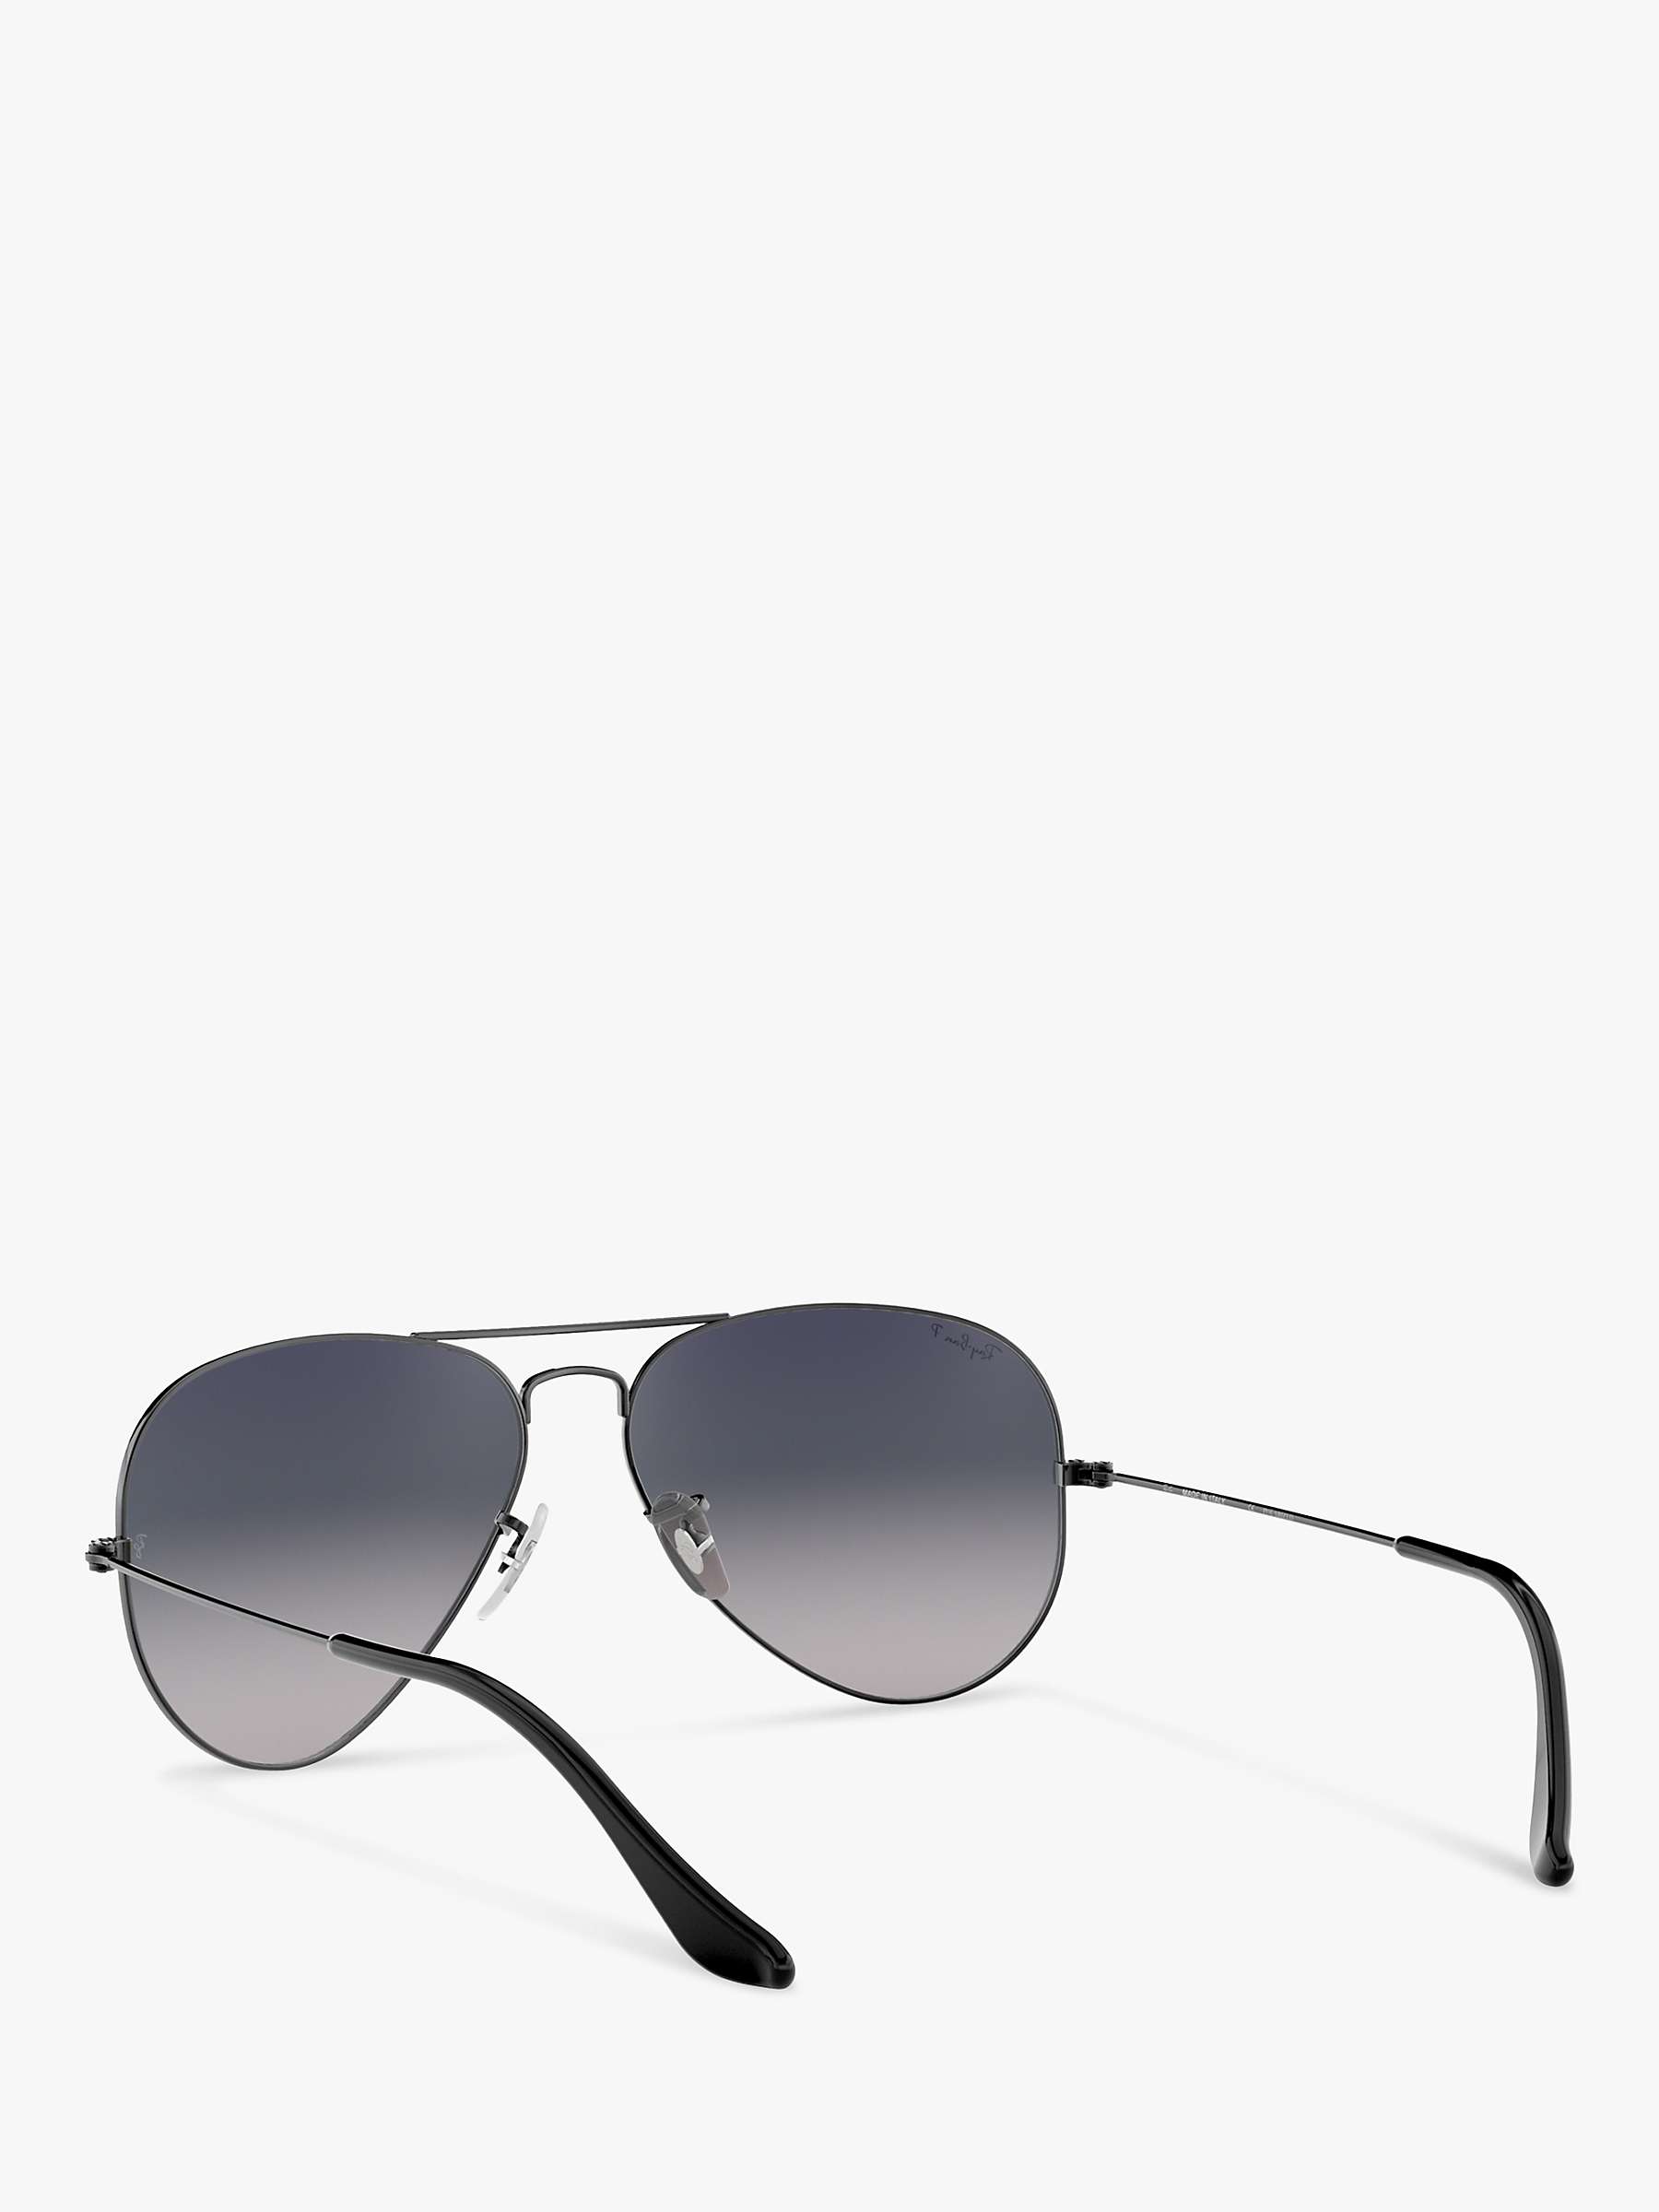 Buy Ray-Ban RB3025 004/78 Aviator Sunglasses, Gunmetal Online at johnlewis.com